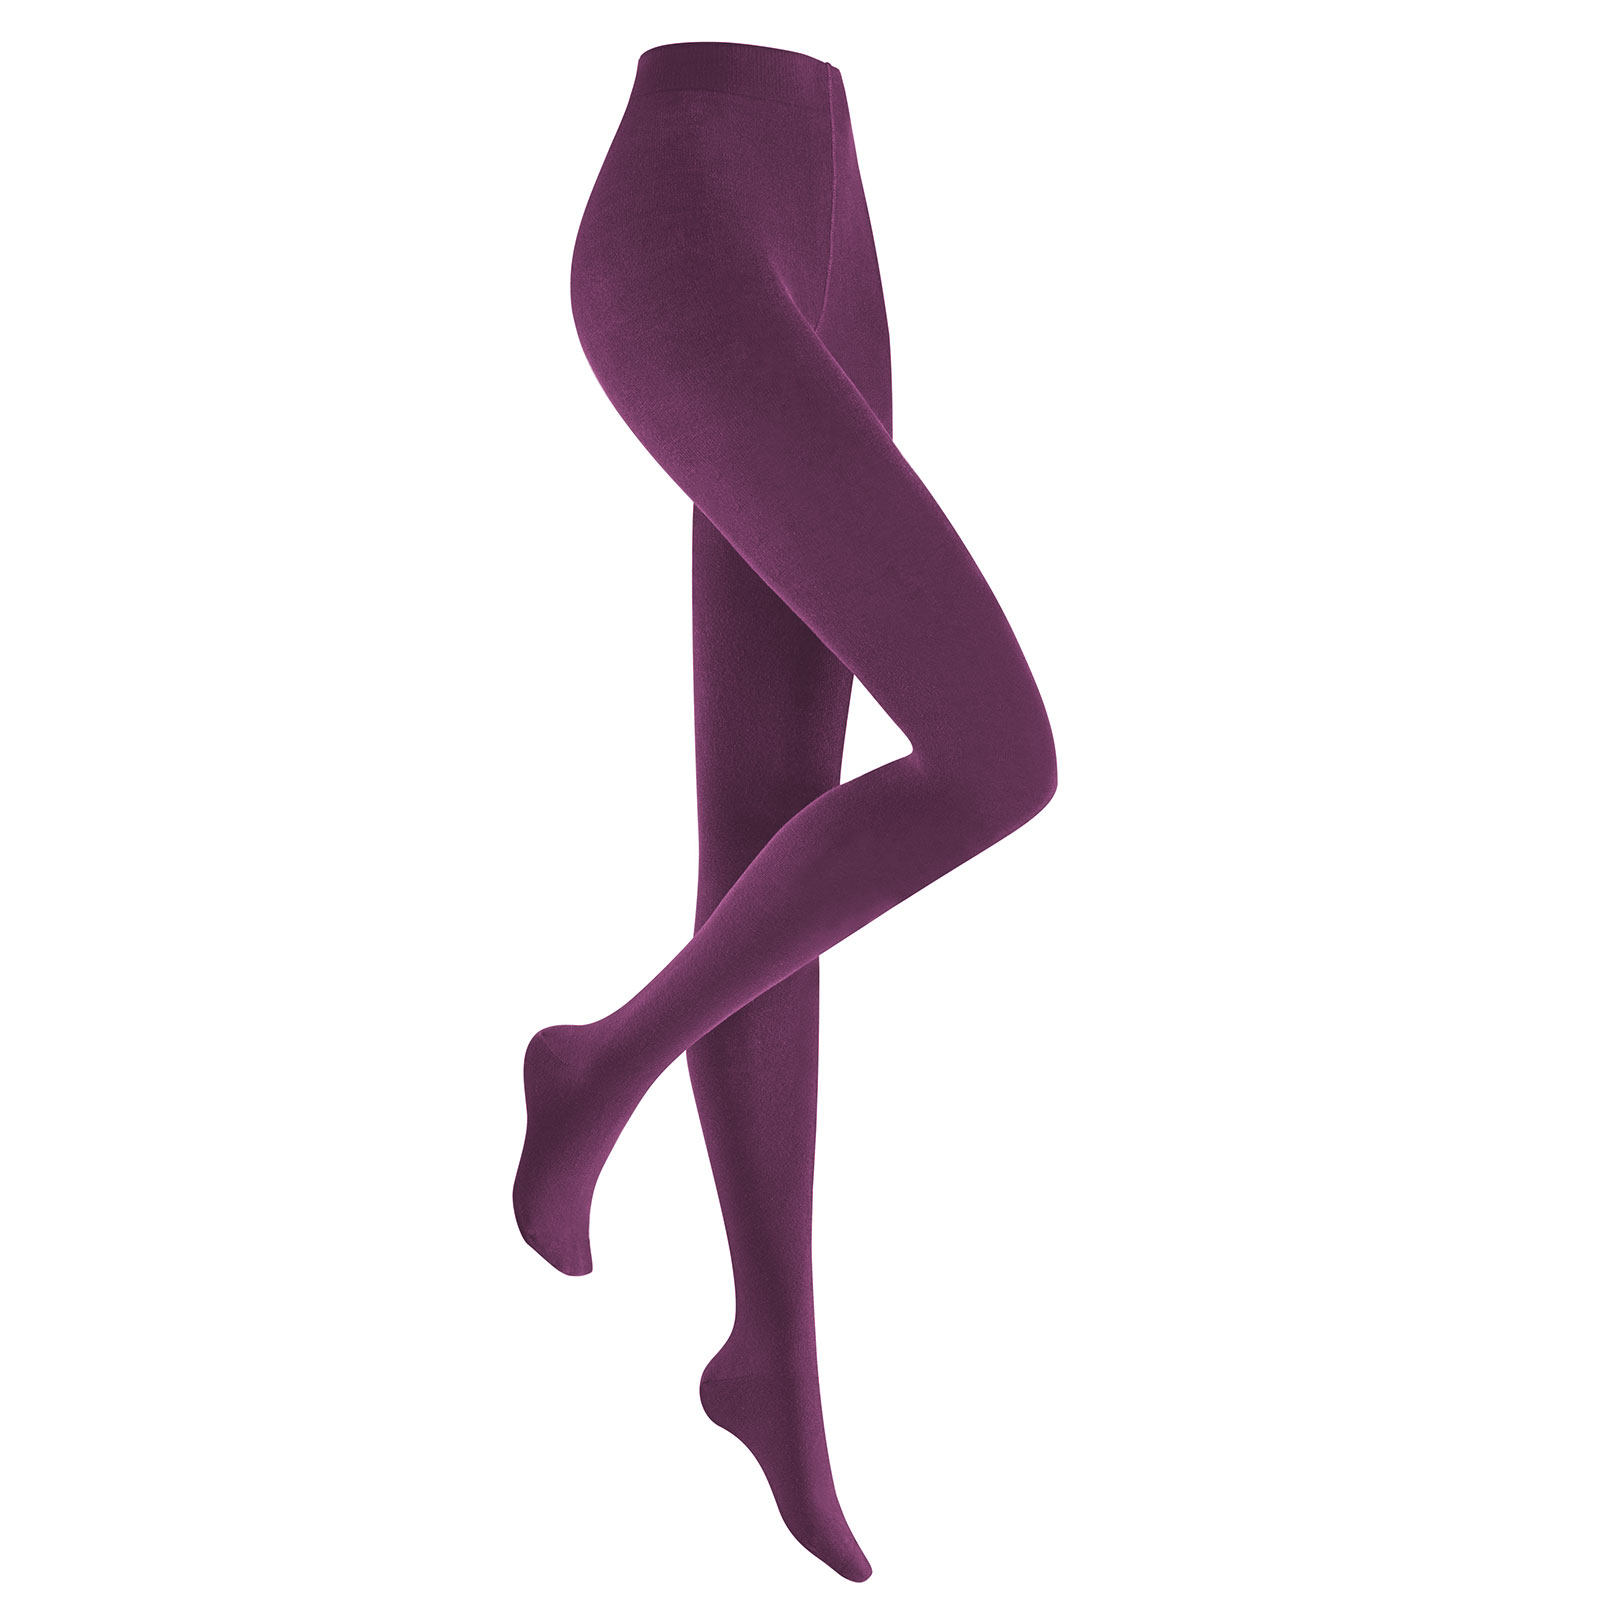 HUDSON Damen RELAX FINE  -  38/40 - Blickdichte Strumpfhose / Strickstrumpfhose mit hohem Baumwollanteil - Sweet lilac (Pink/Violett)